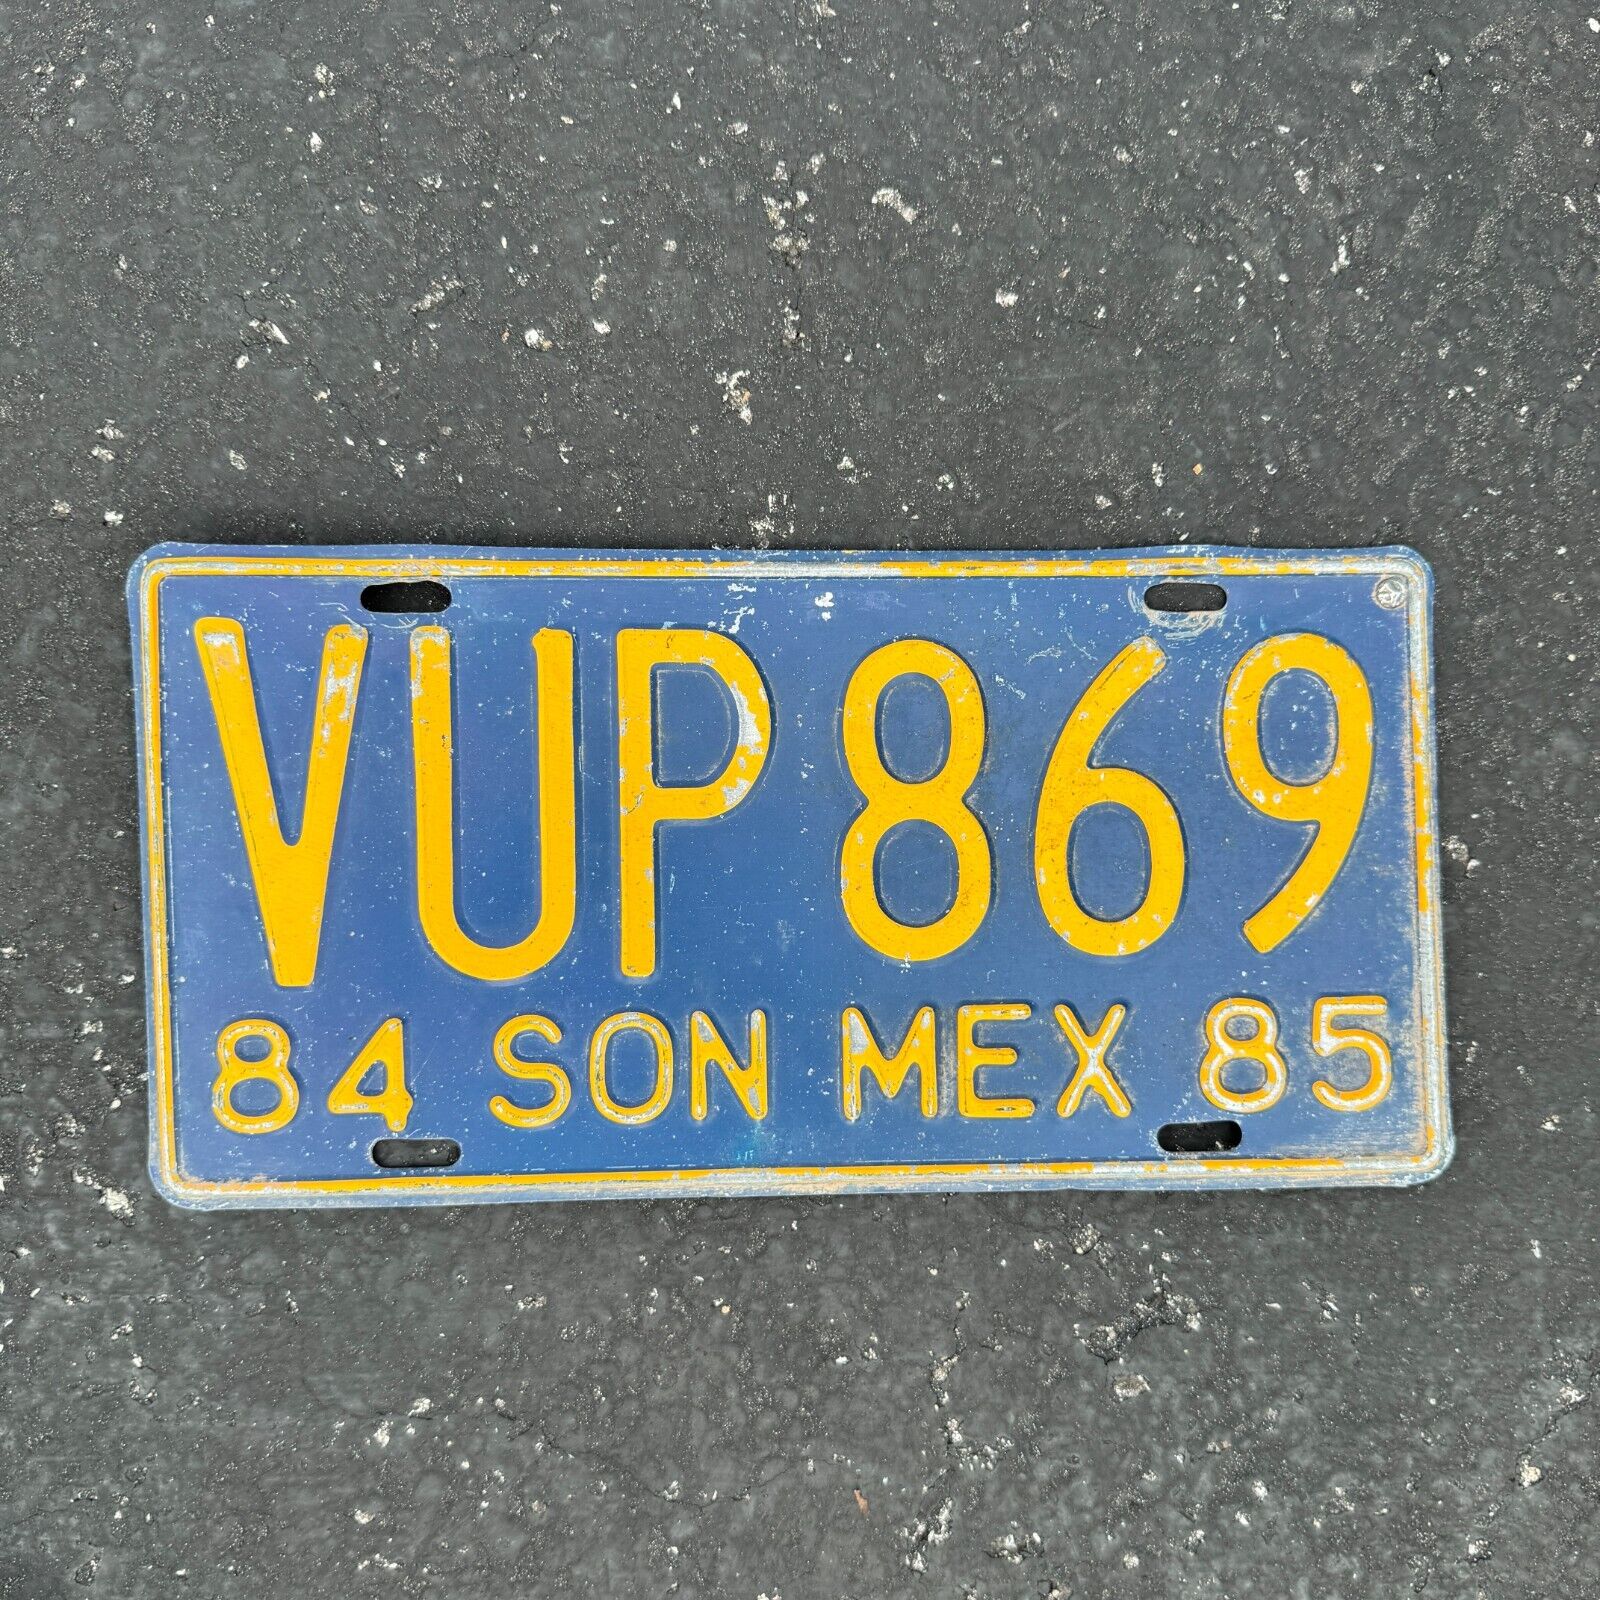 1984 1985 Sonora Mexico License Plate Vintage Garage Wall Decor Auto Tag VUP 869